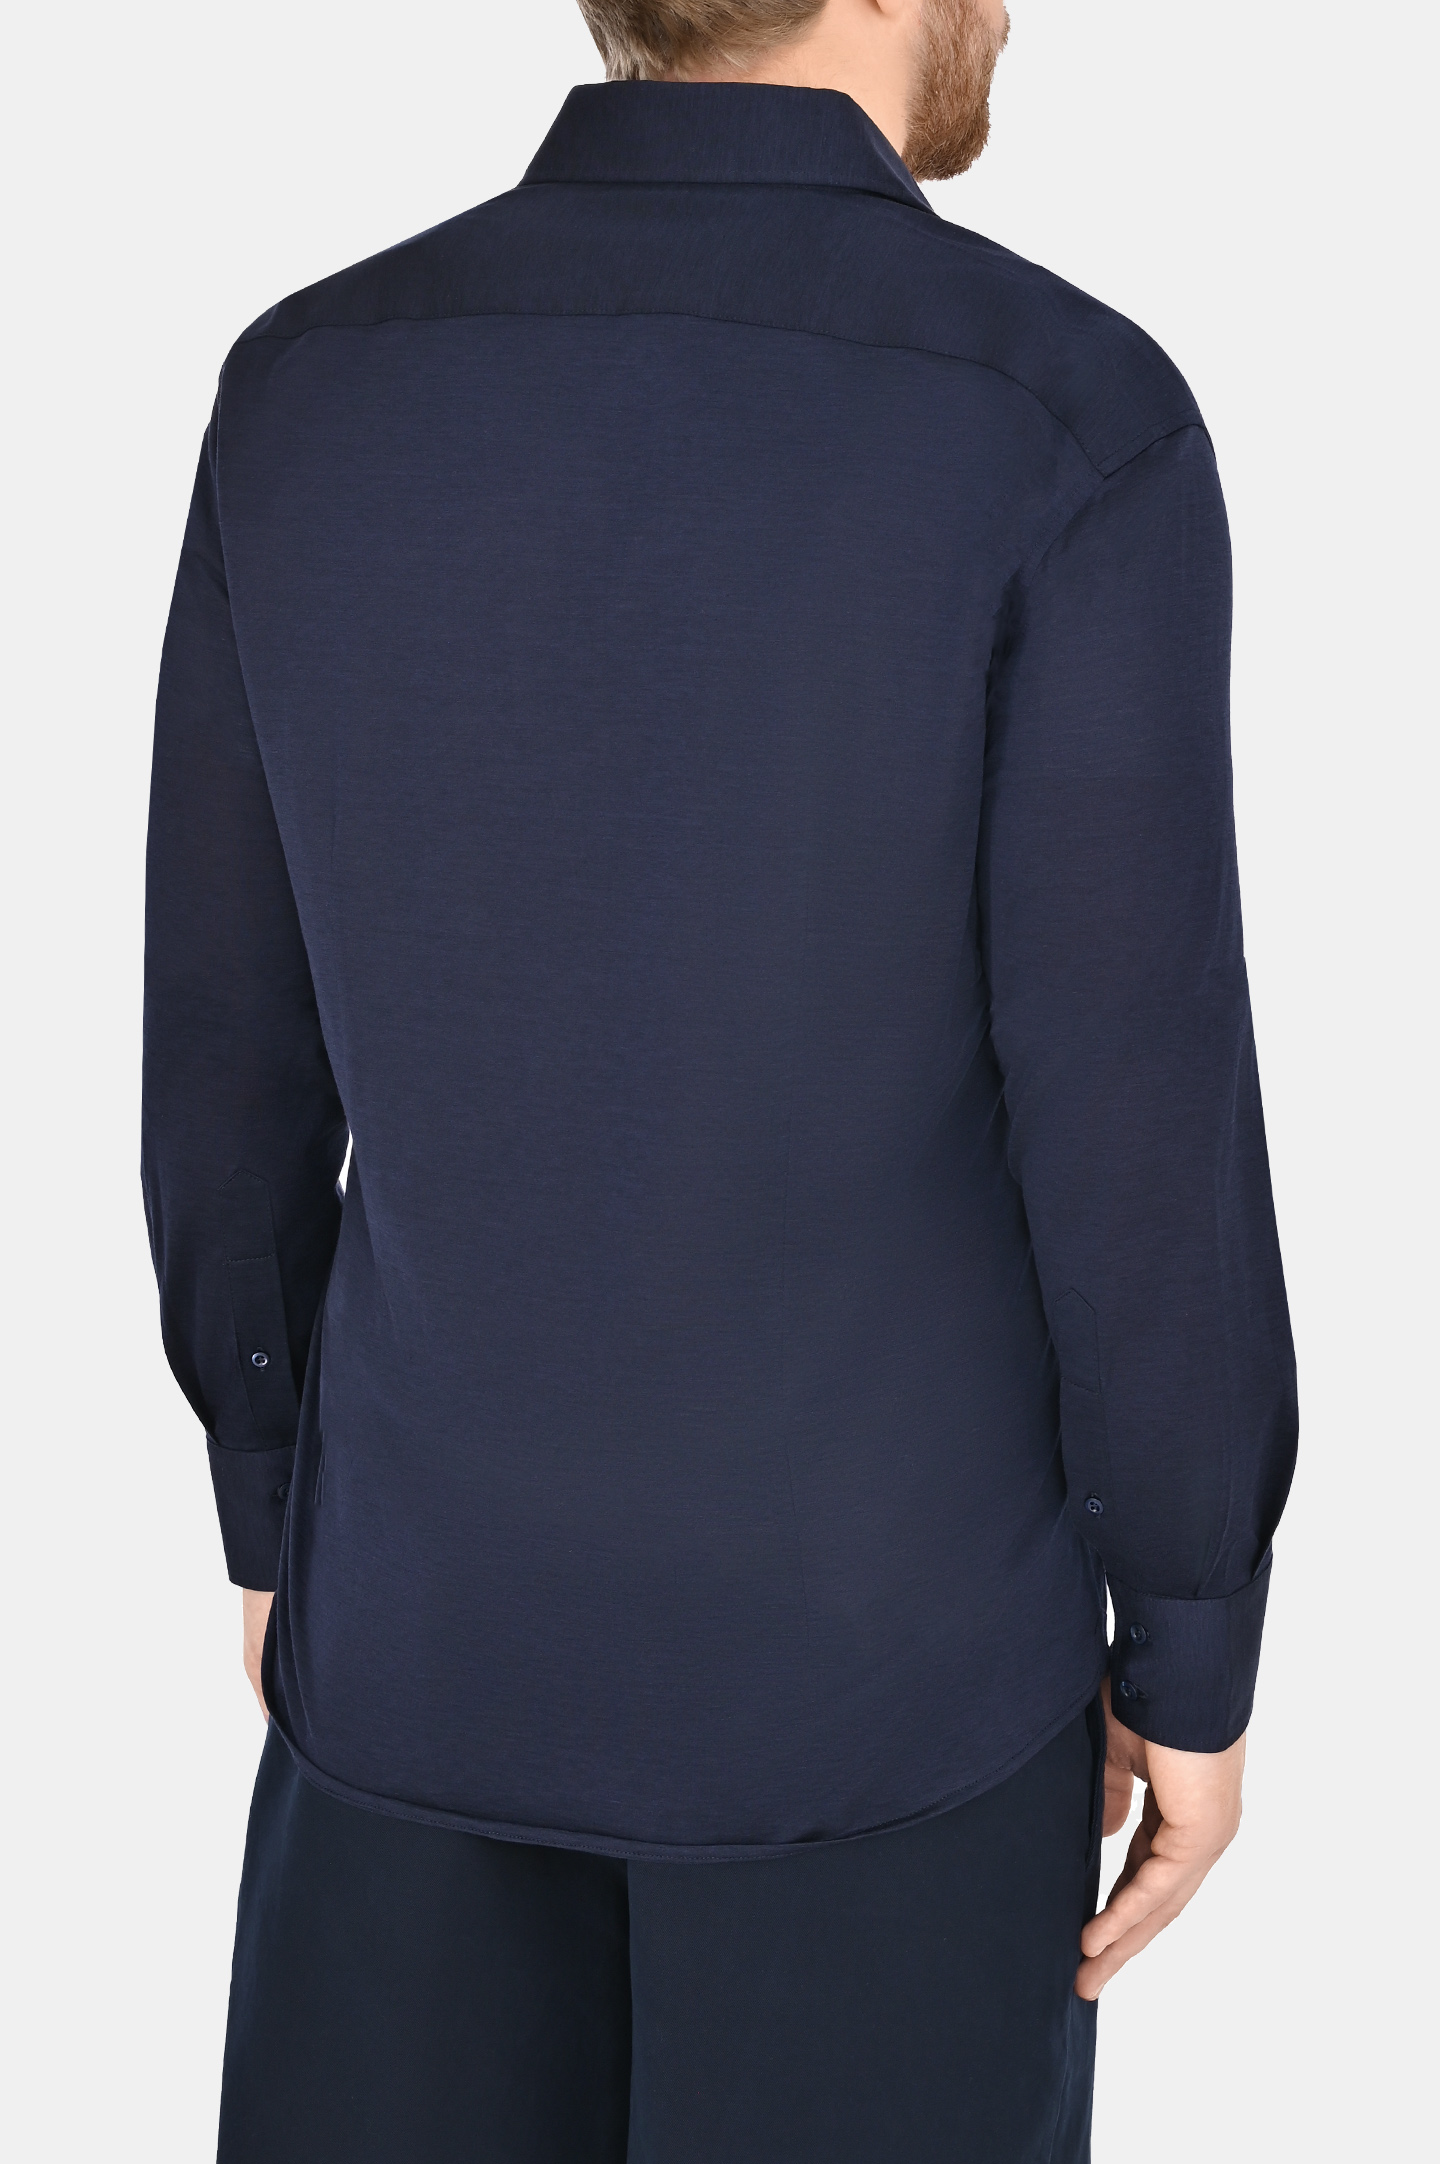 Рубашка BRUNELLO  CUCINELLI MD8216686, цвет: Темно-синий, Мужской